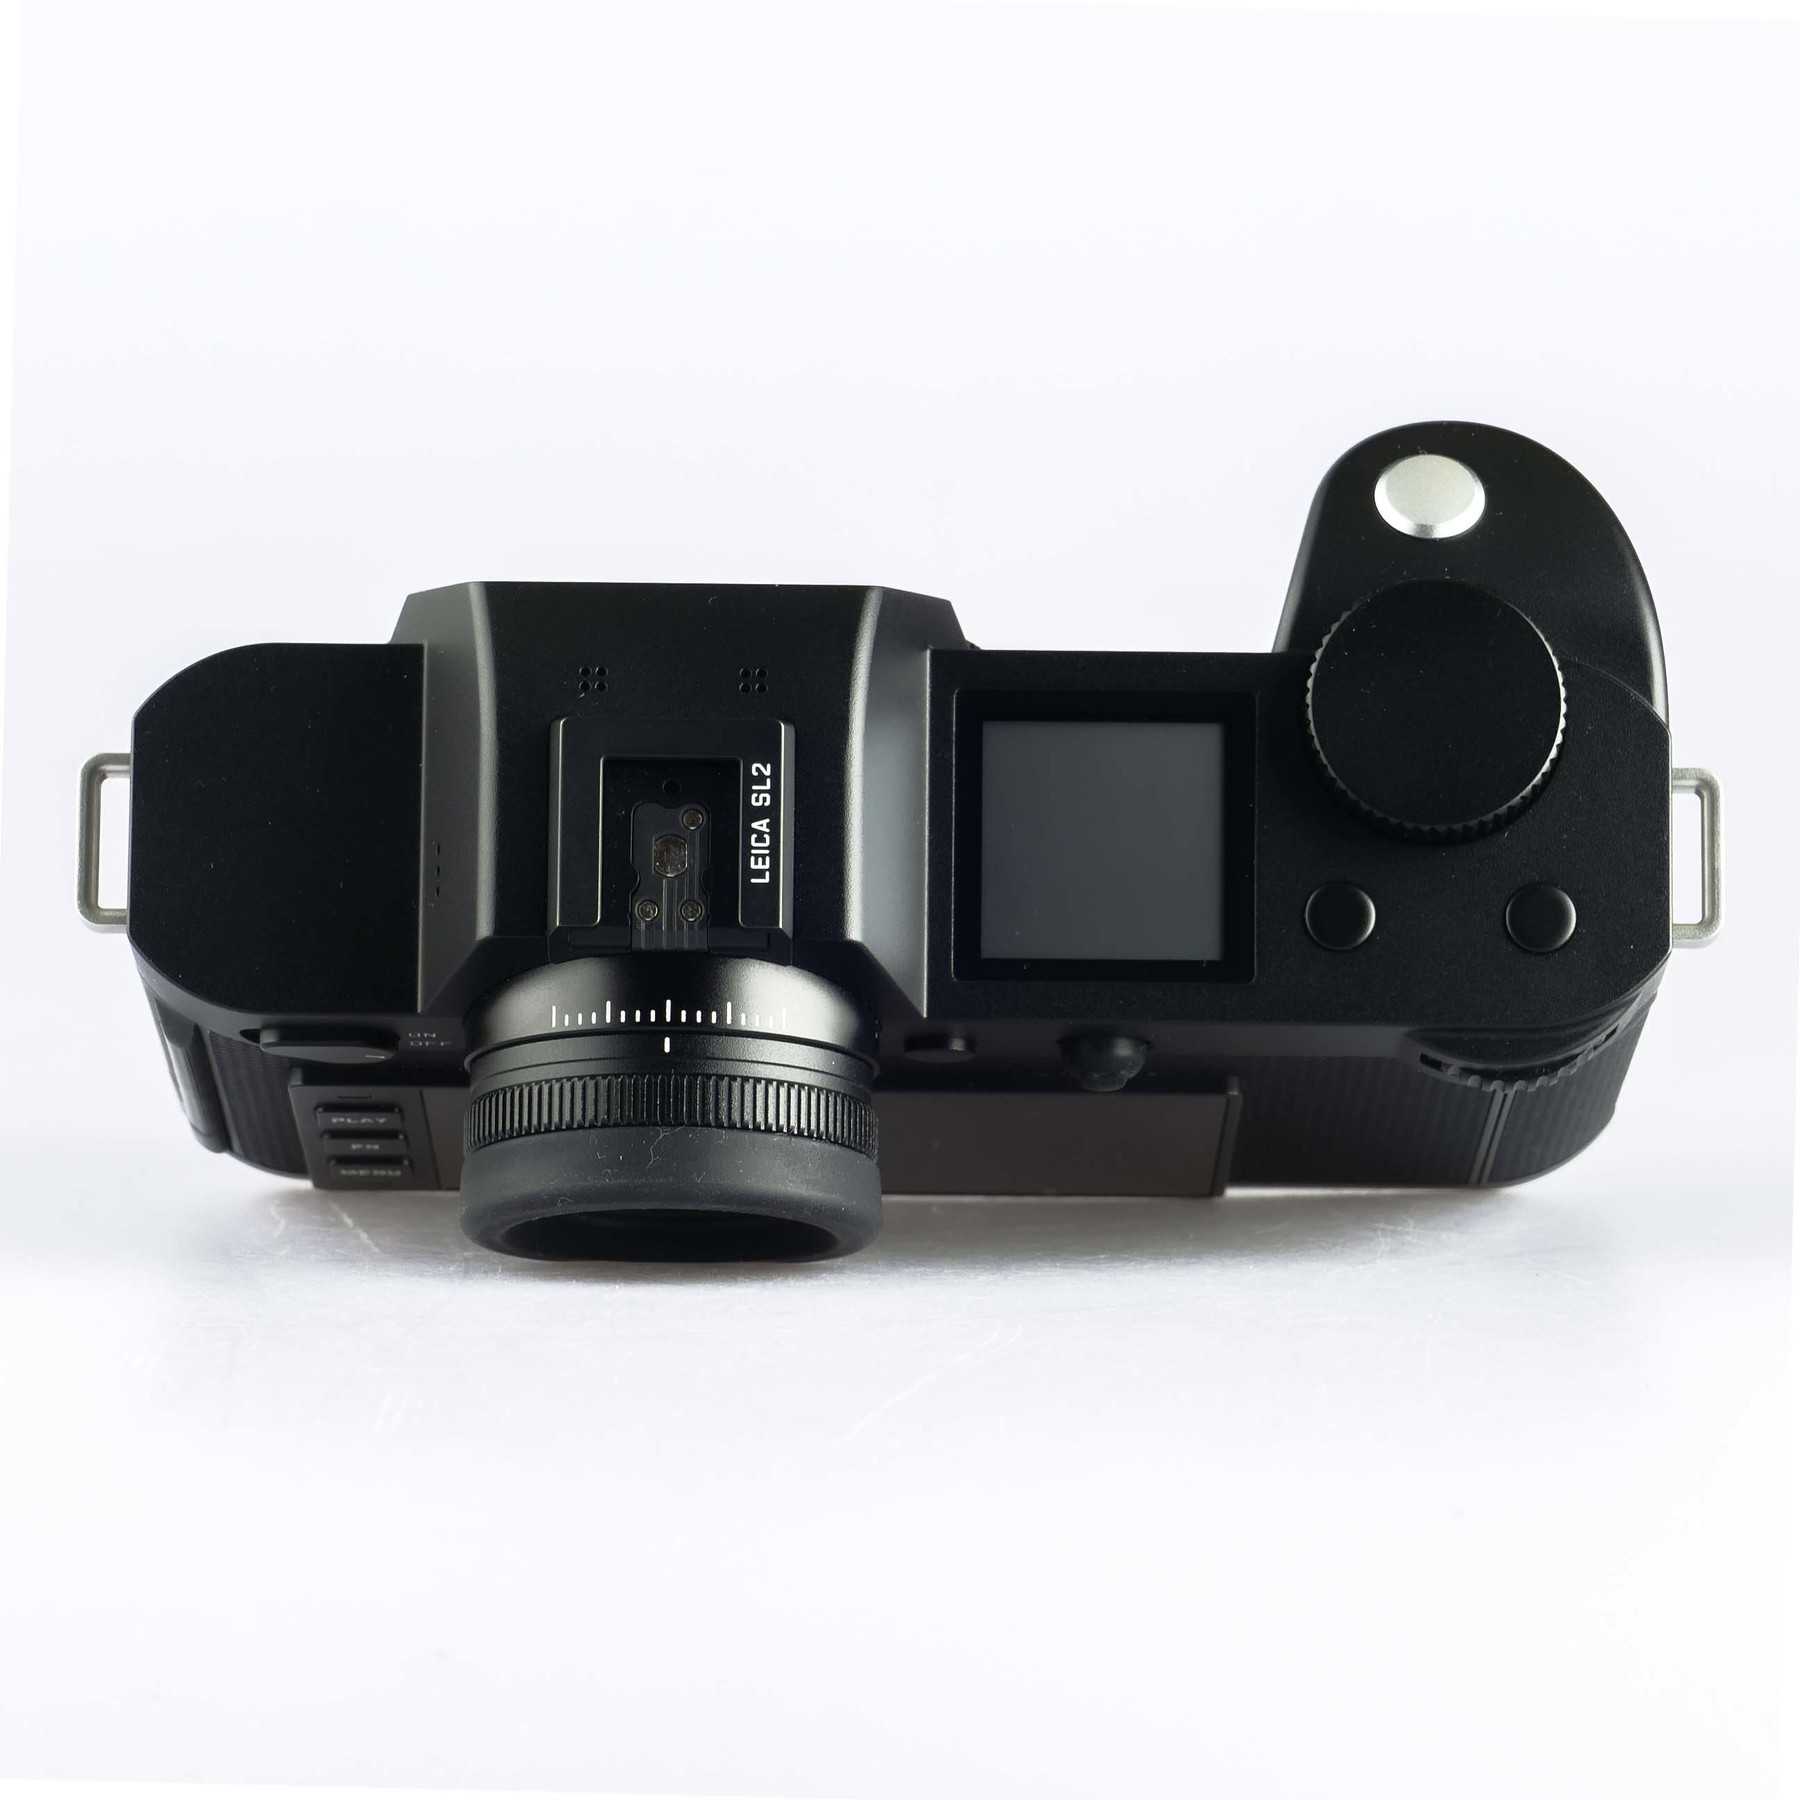 Leica SL2 black